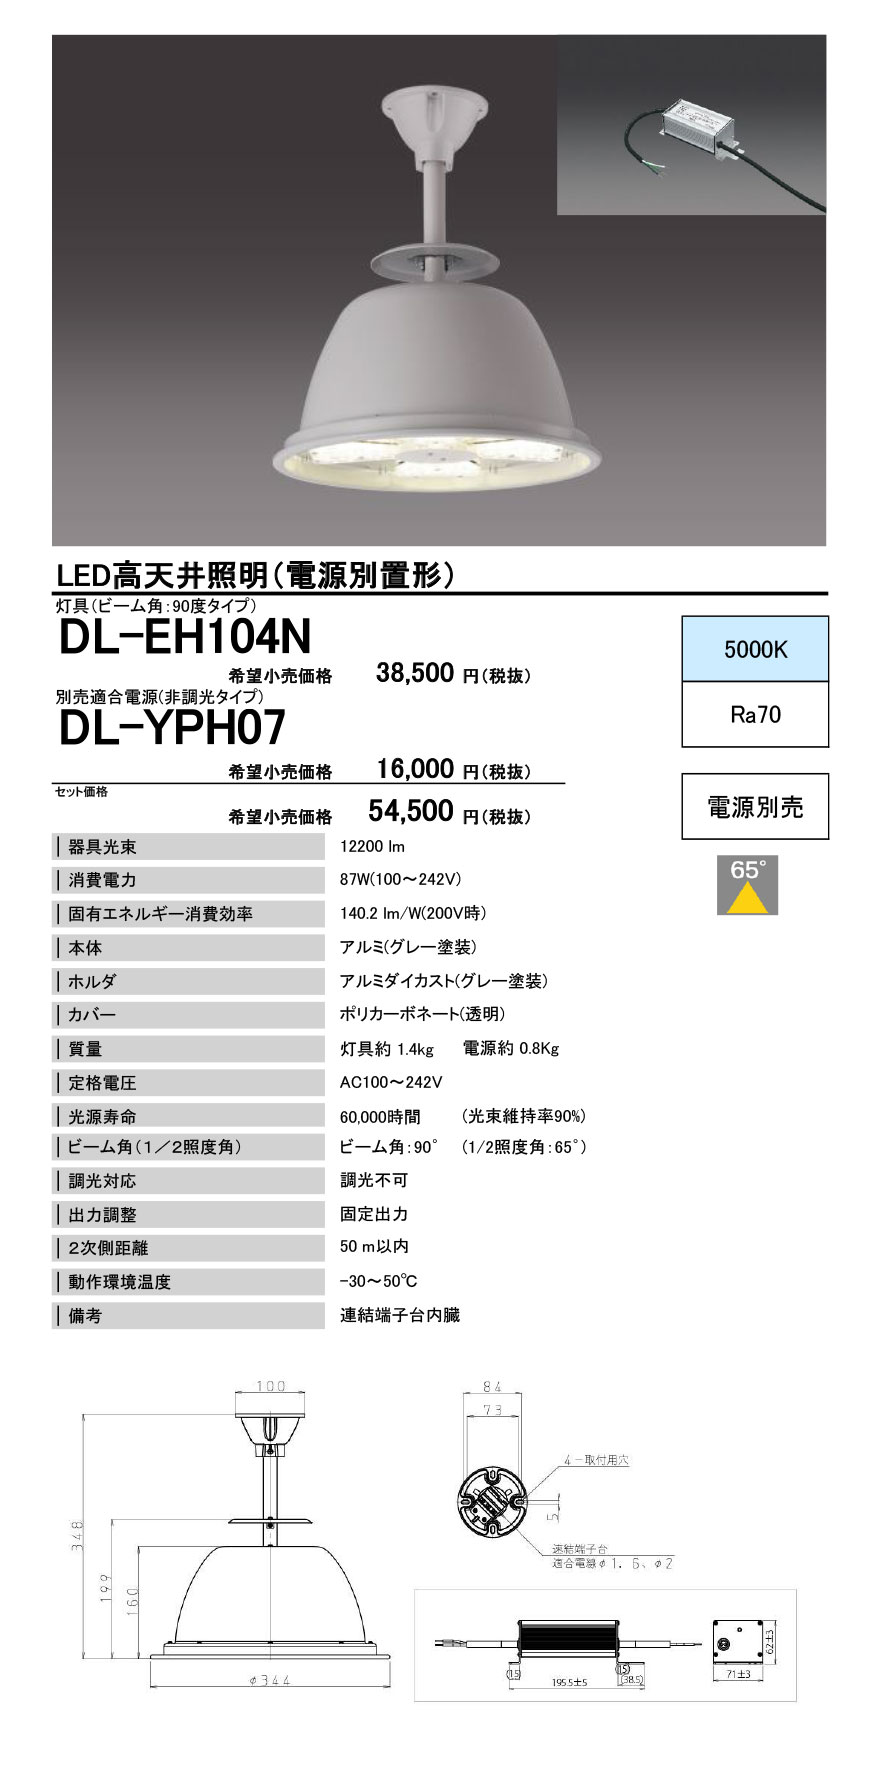 SHARP SHARP 高天井照明 電源別置形 DL-EH104N HID（メタルハライドランプ）250W相当